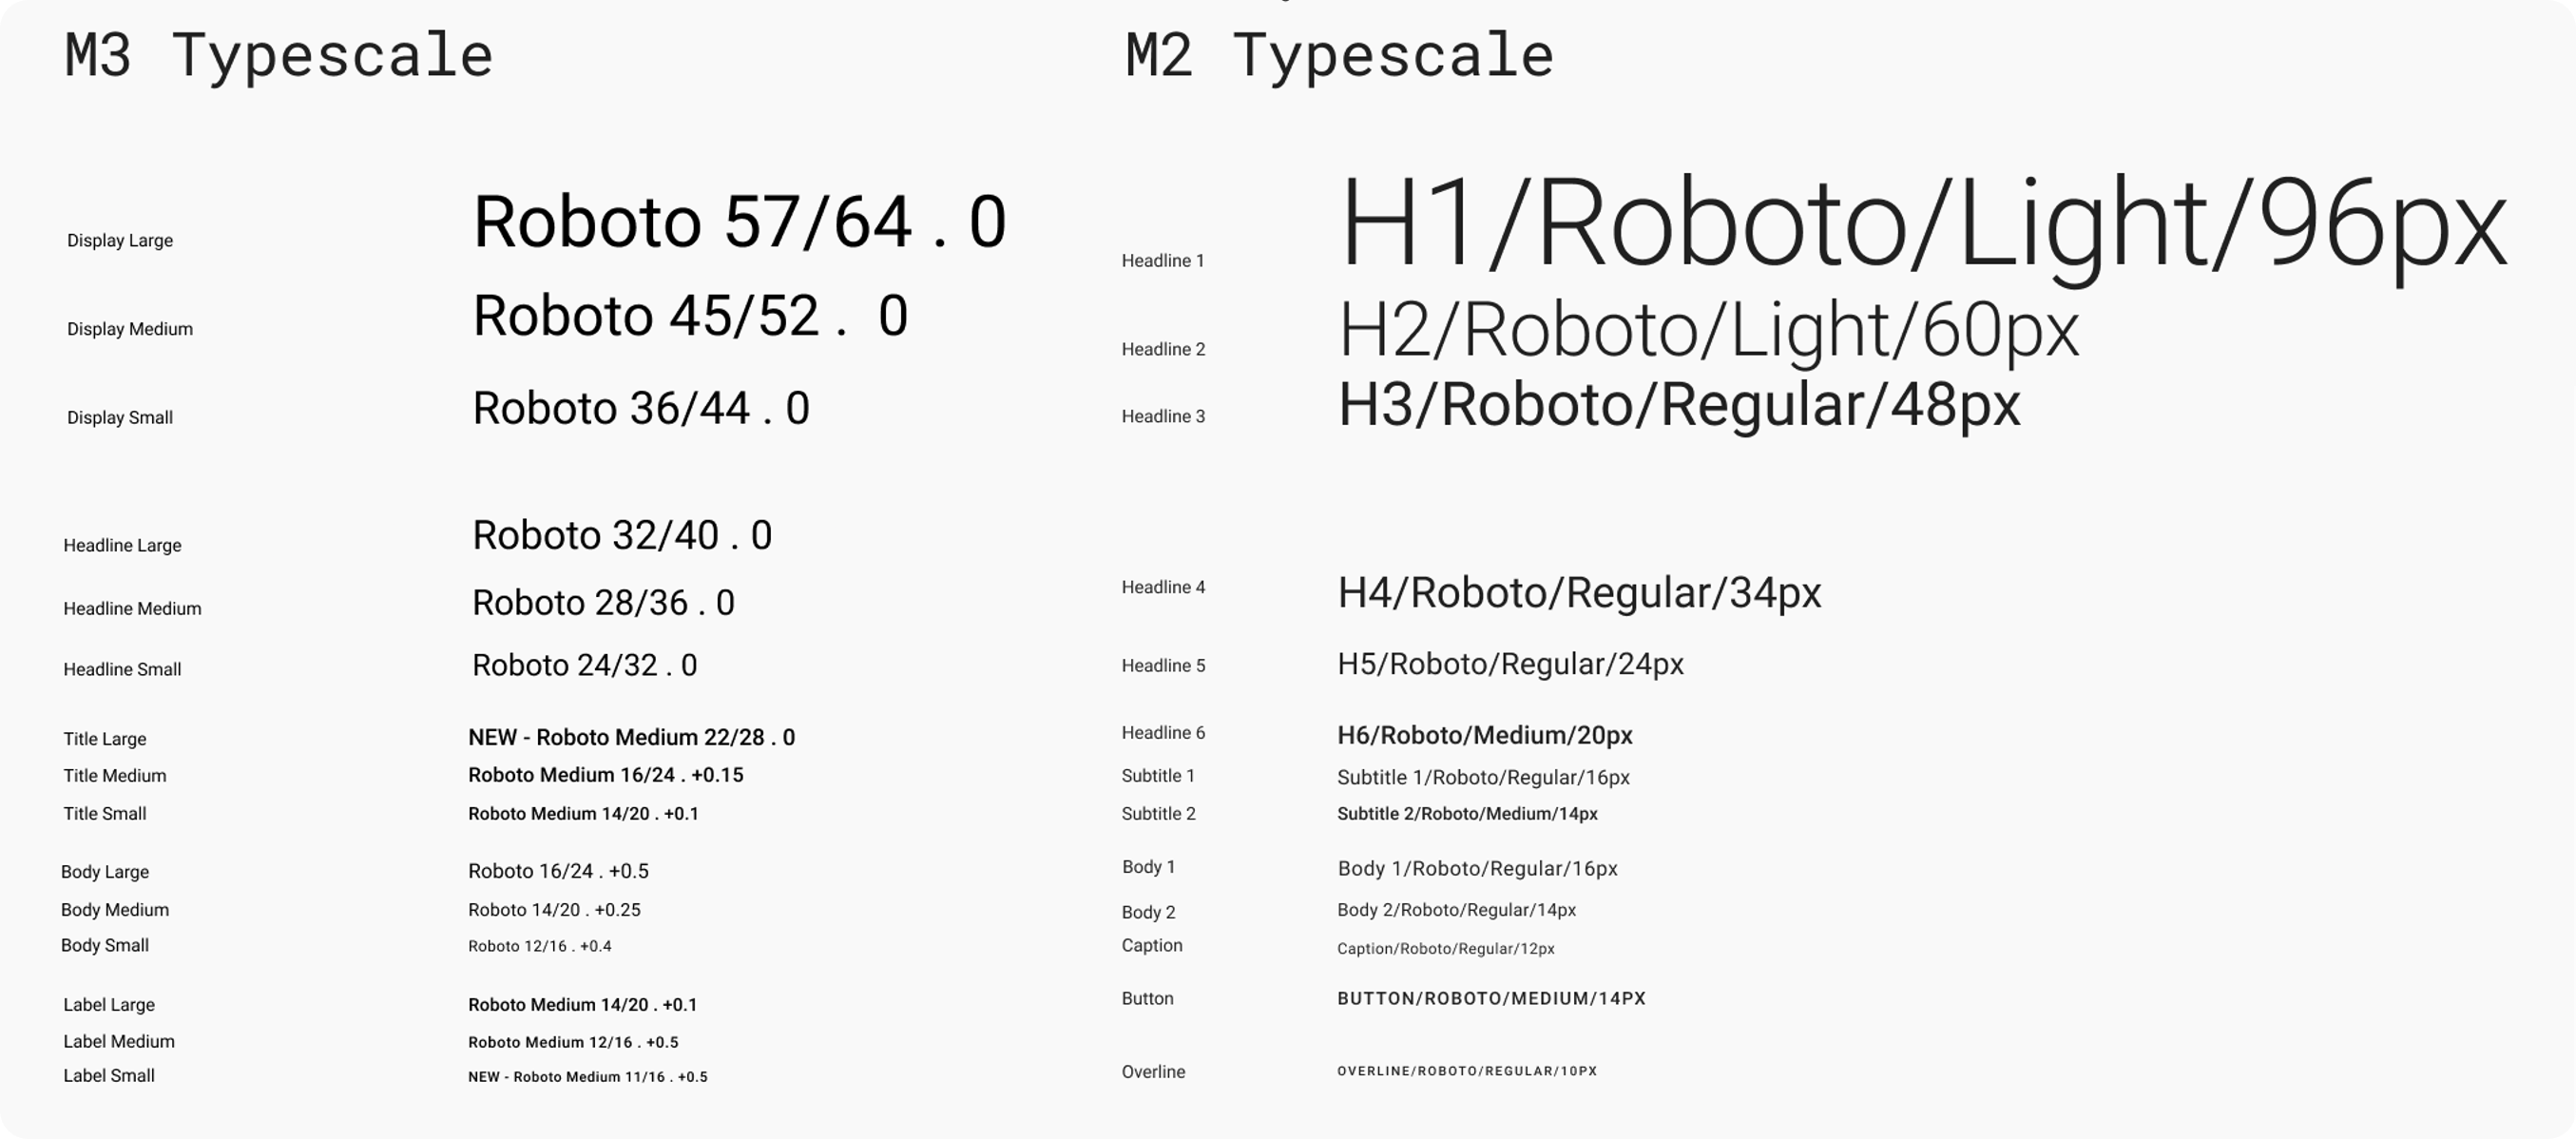 M3 vs M2 text style